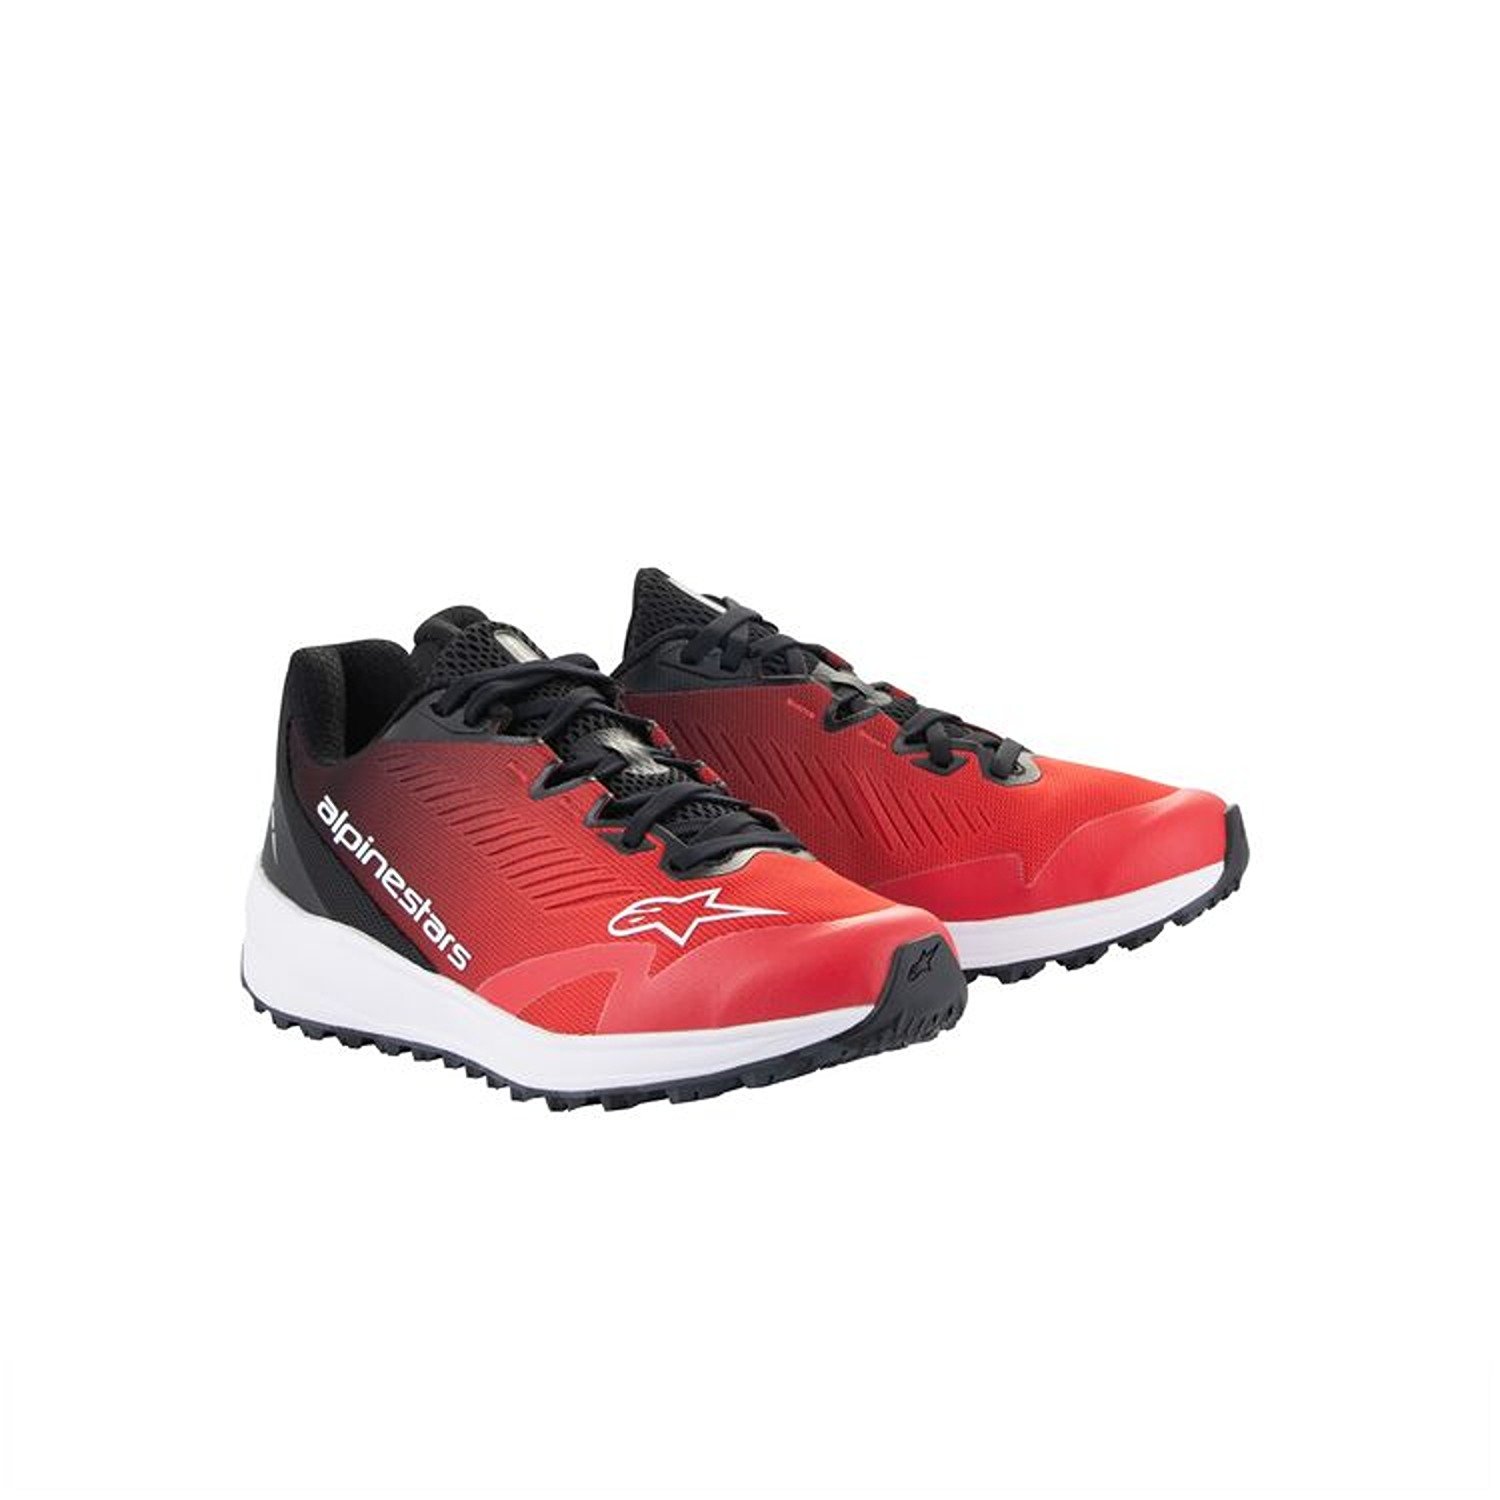 Image of Alpinestars Meta Road V2 Shoes Red Black White Size US 11 ID 8059347353609